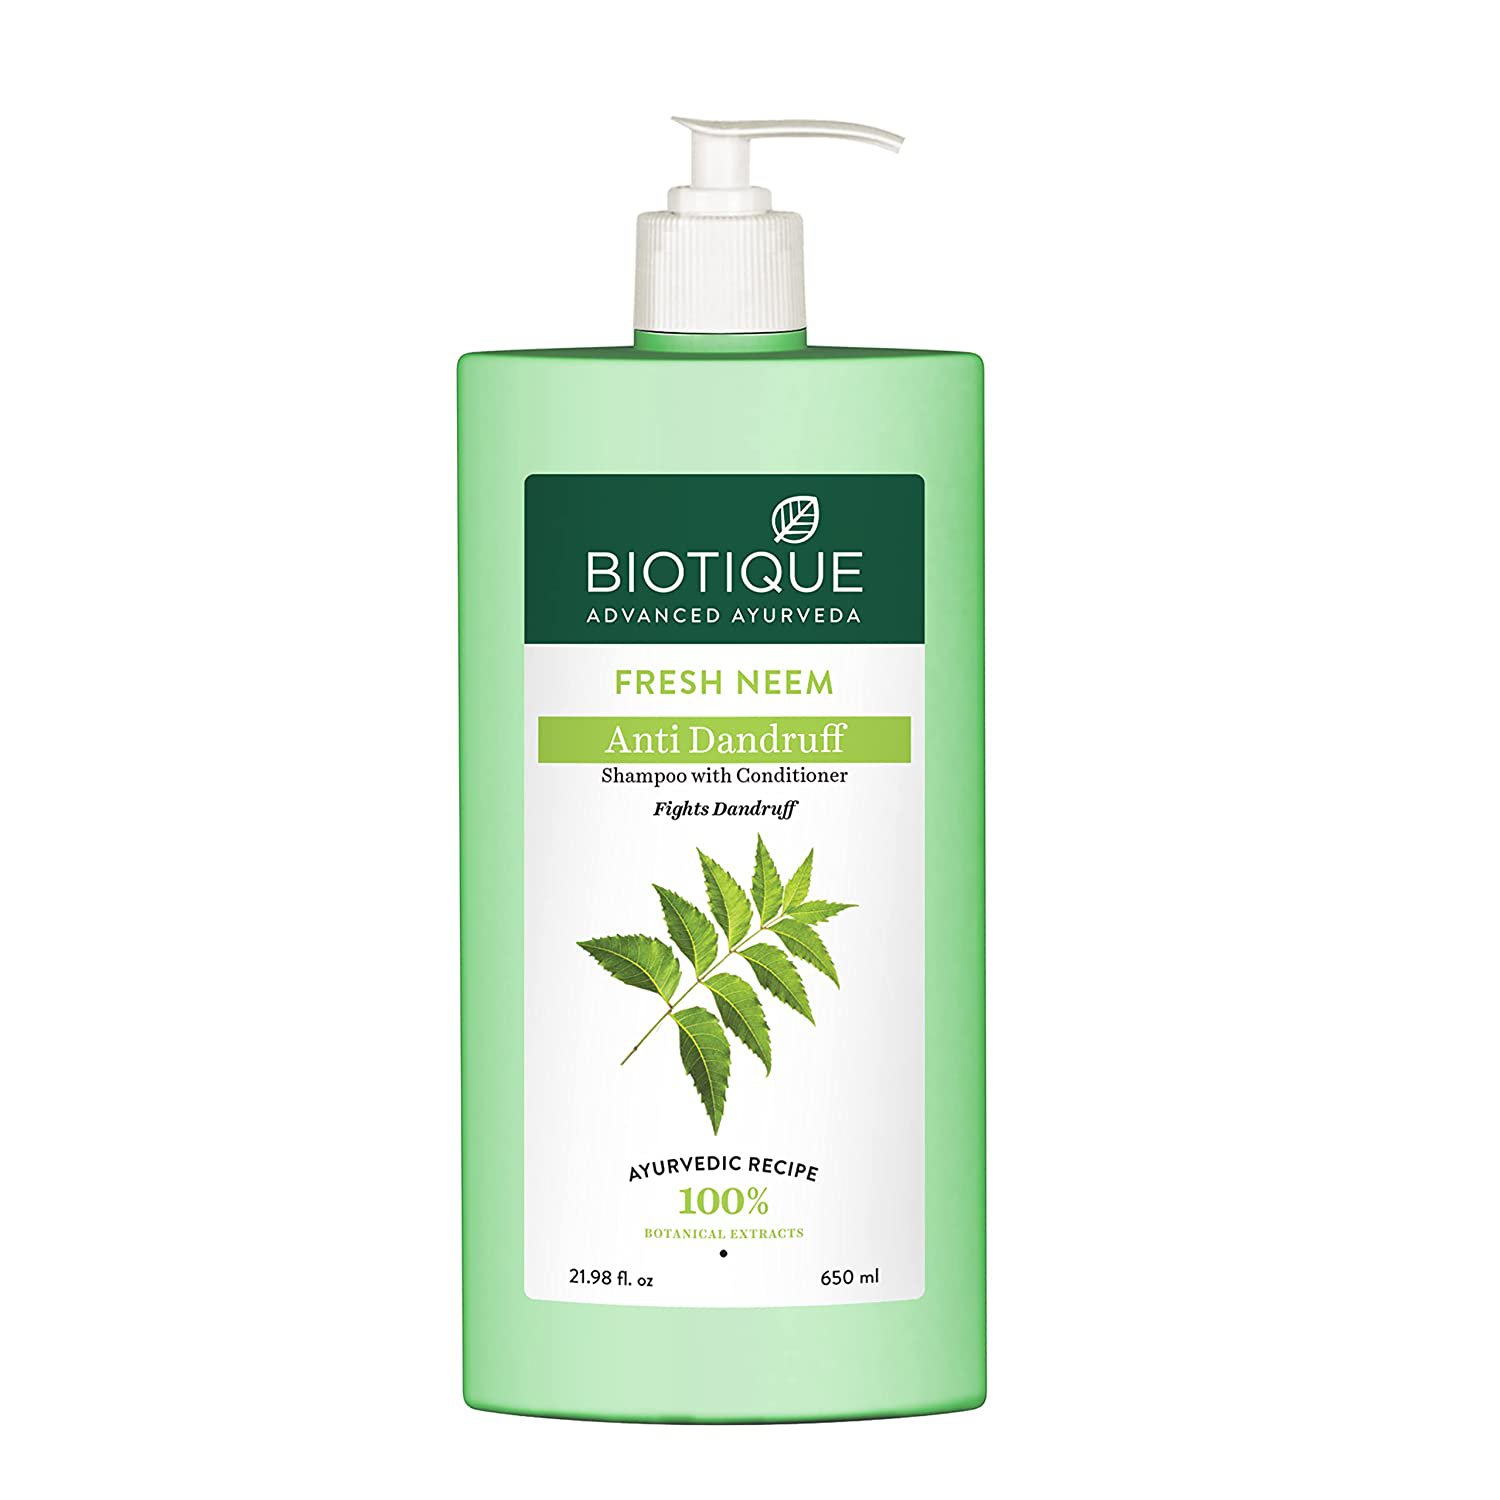 Biotique Fresh Neem Anti Dandruff Shampoo with Conditioner 650 ml